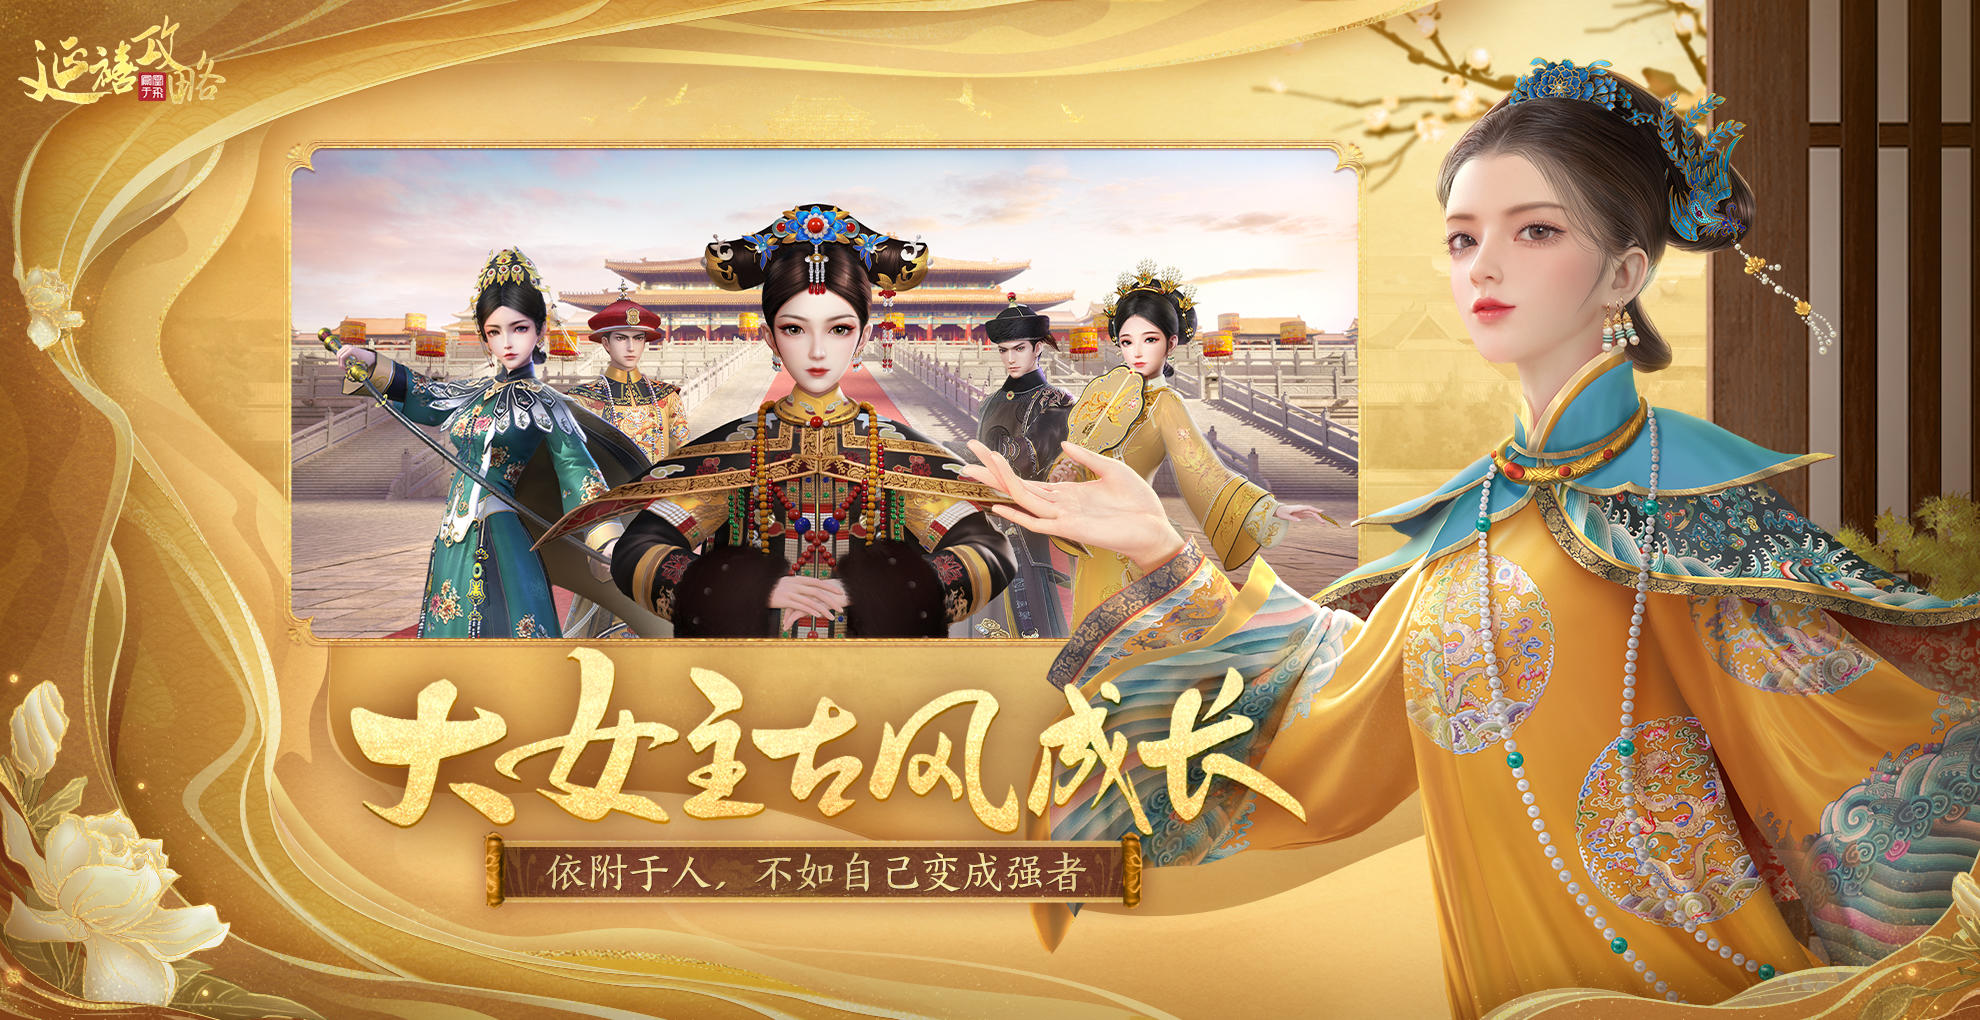 Screenshot 1 of Kisah Istana Yanxi: Phoenix Yufei (Pelayan Ujian) 